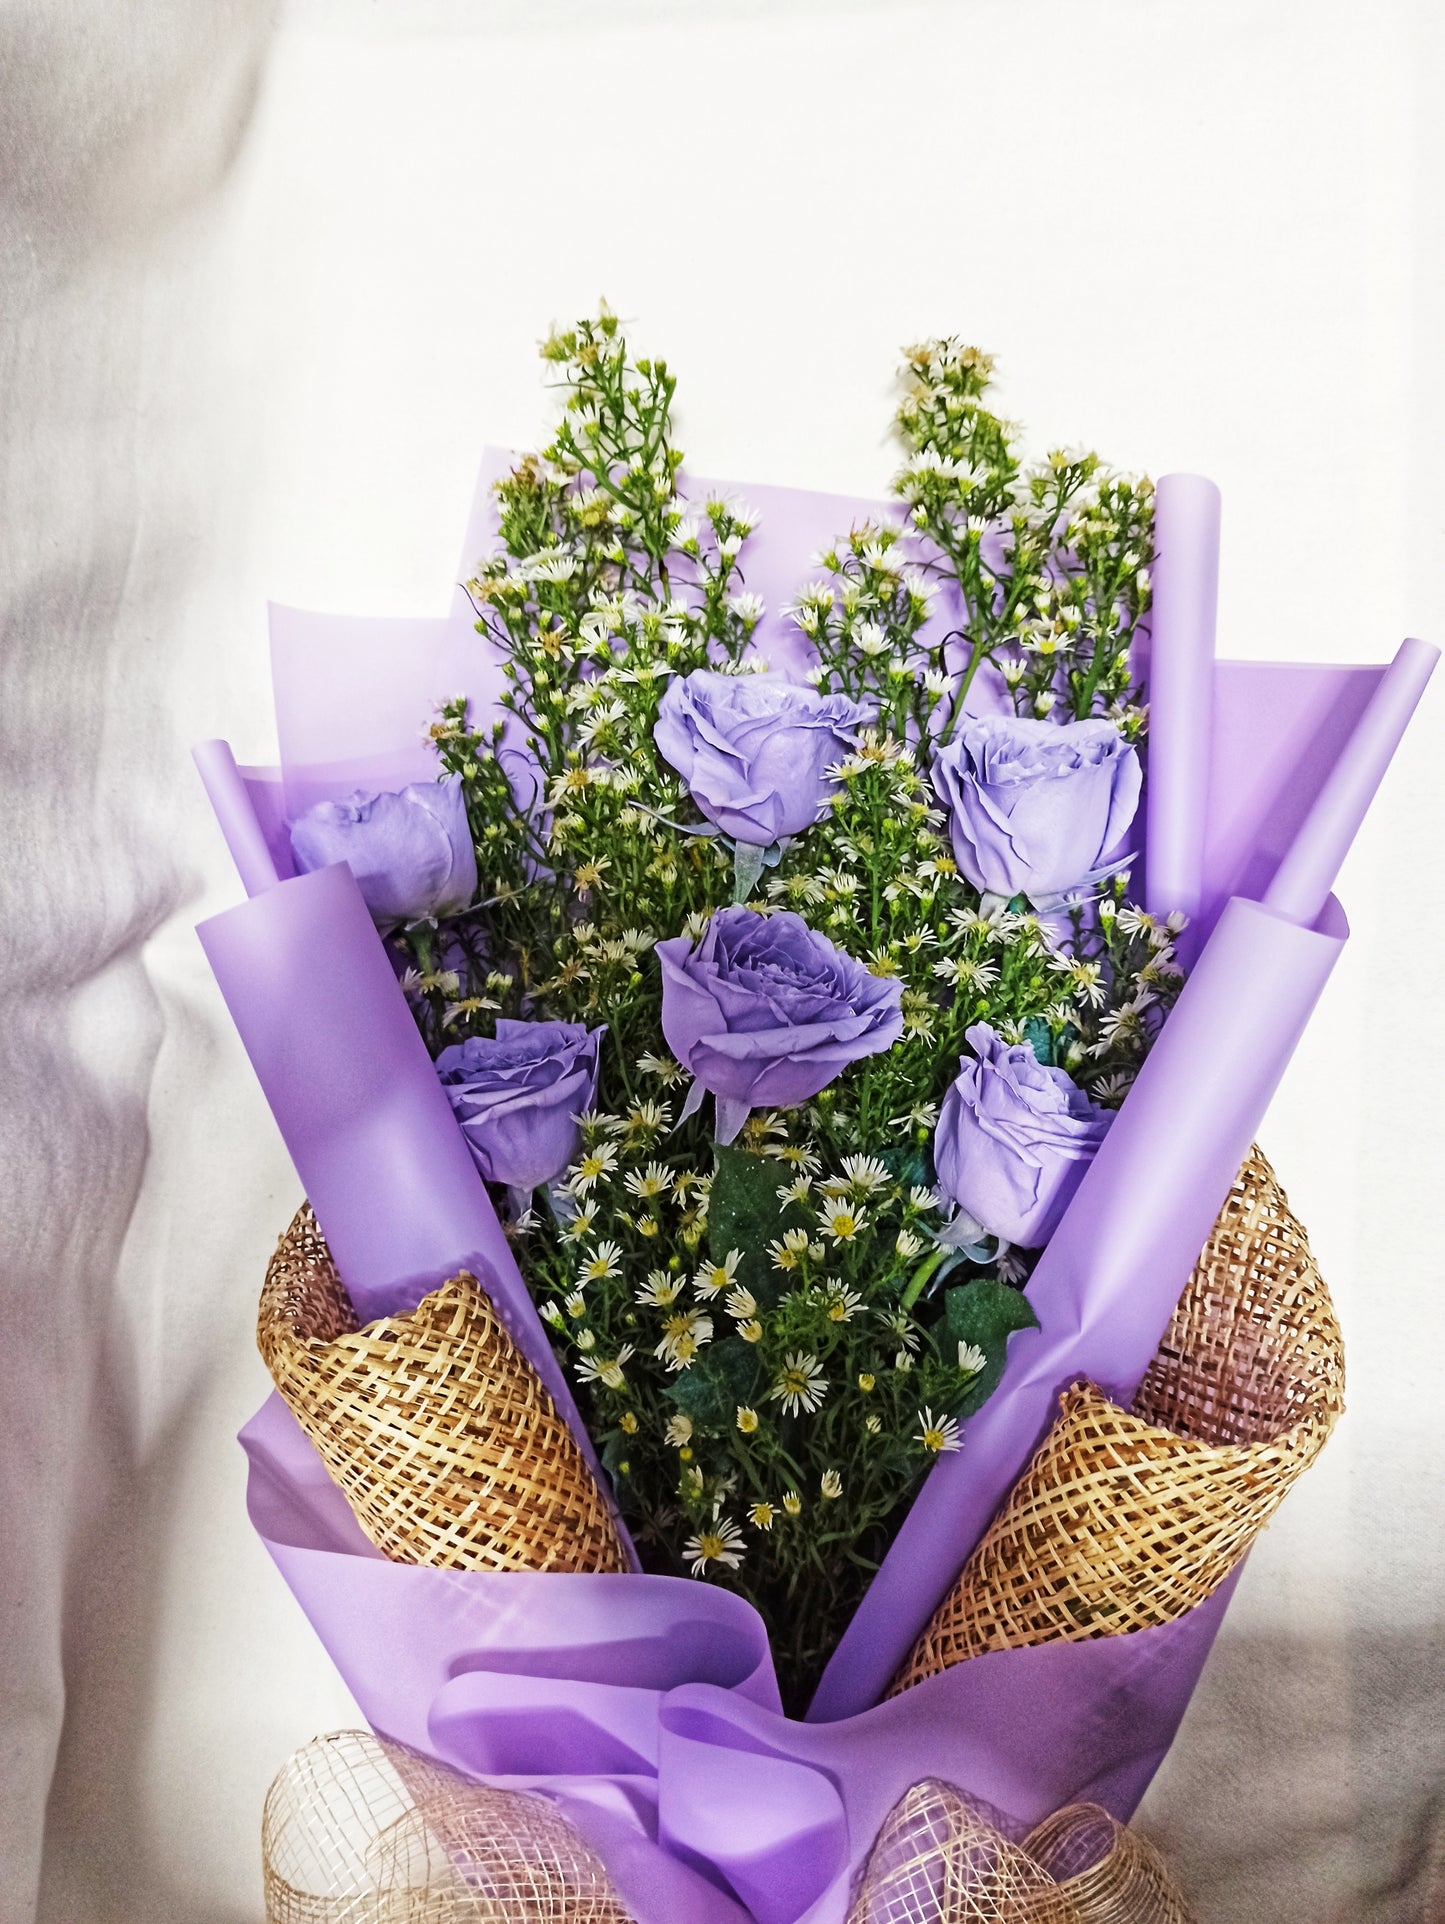 6 stems of Purple rose